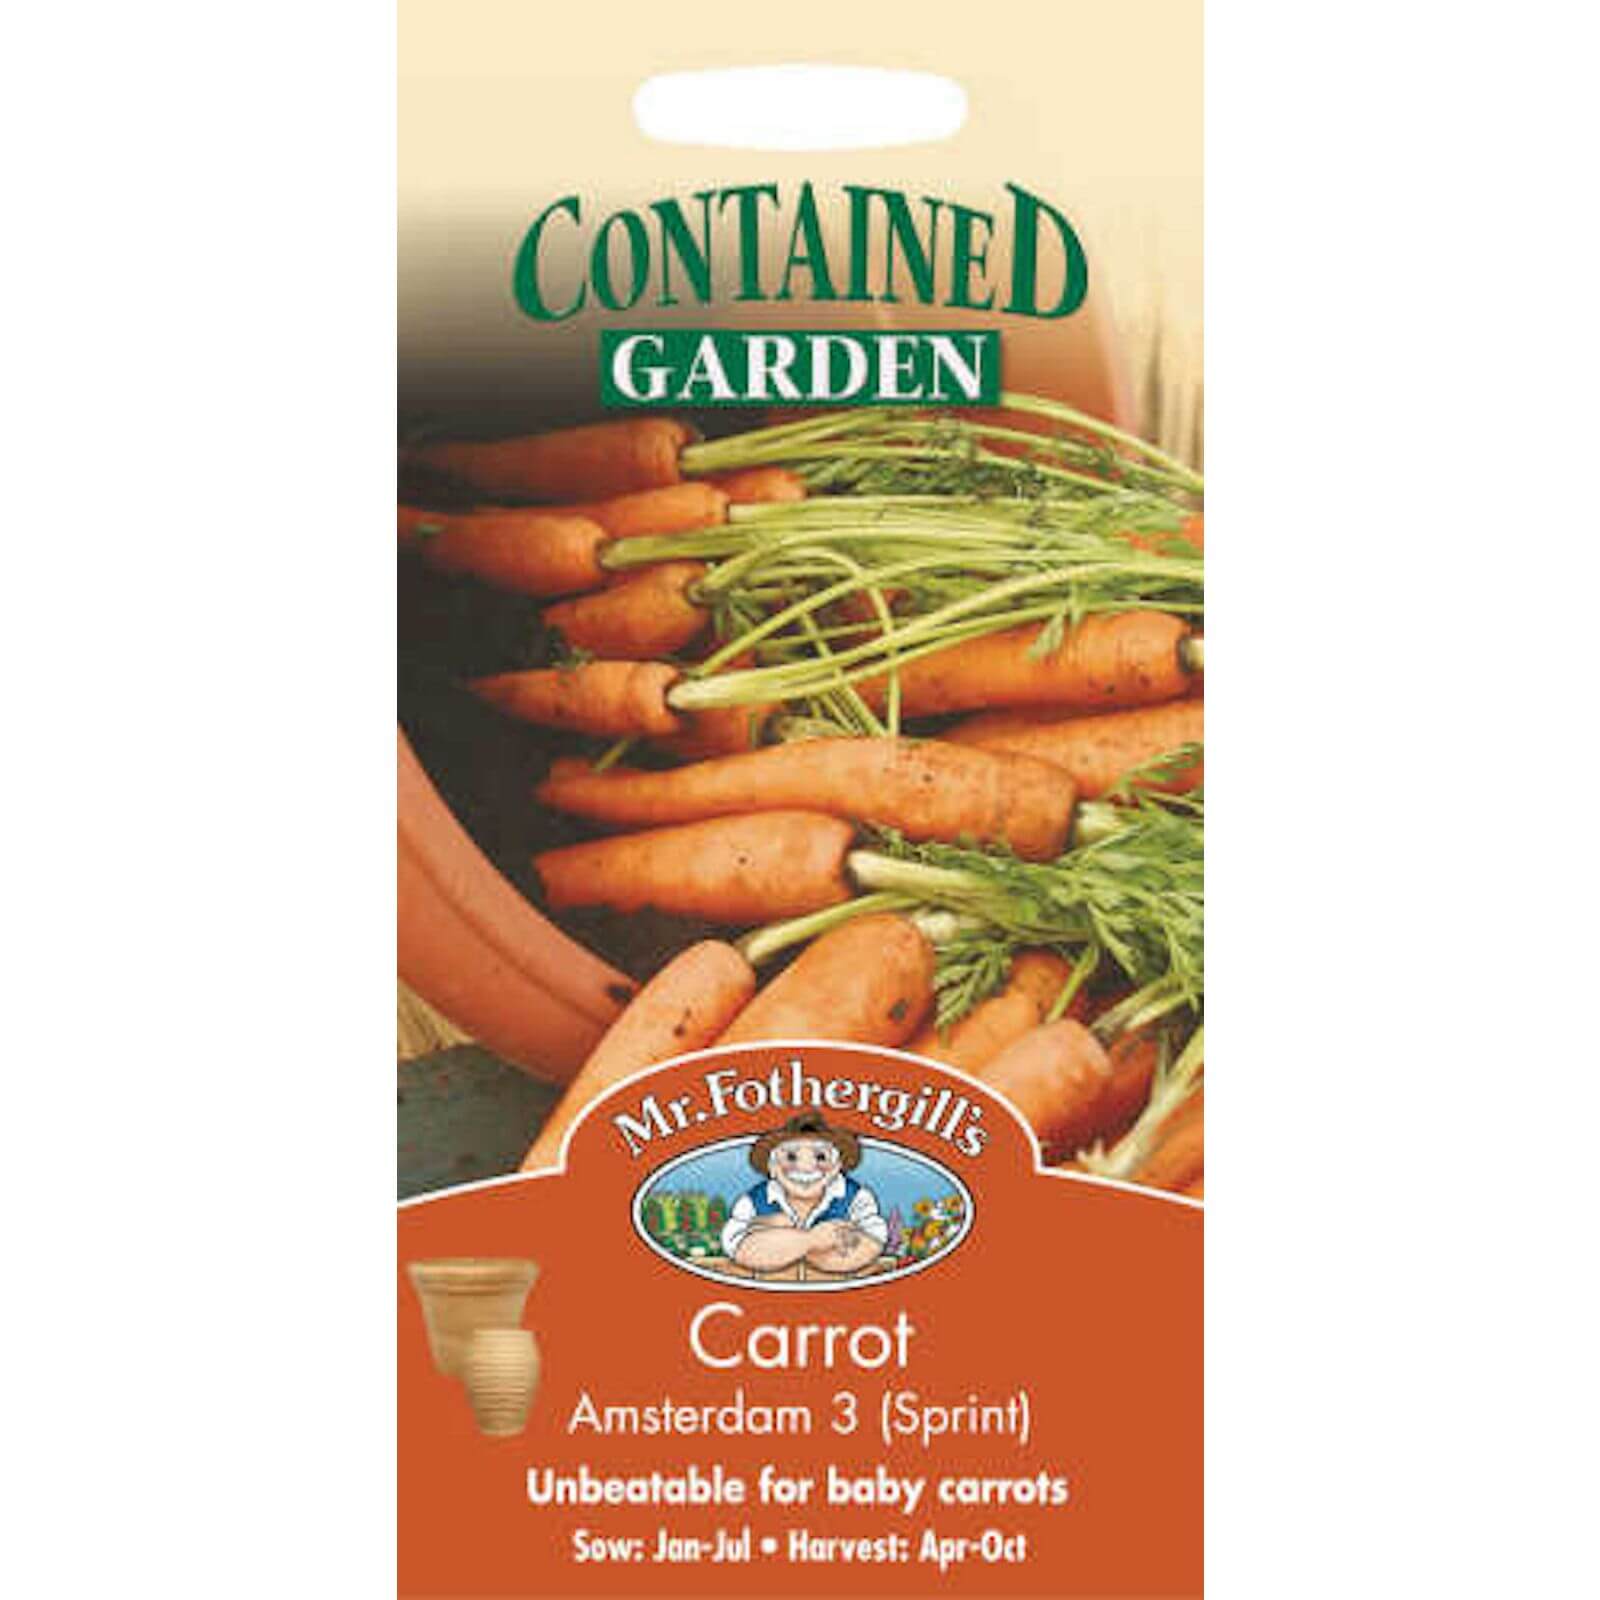 Mr. Fothergill's Carrot Amsterdam 3 Sprint (Daucus Carota) Seeds